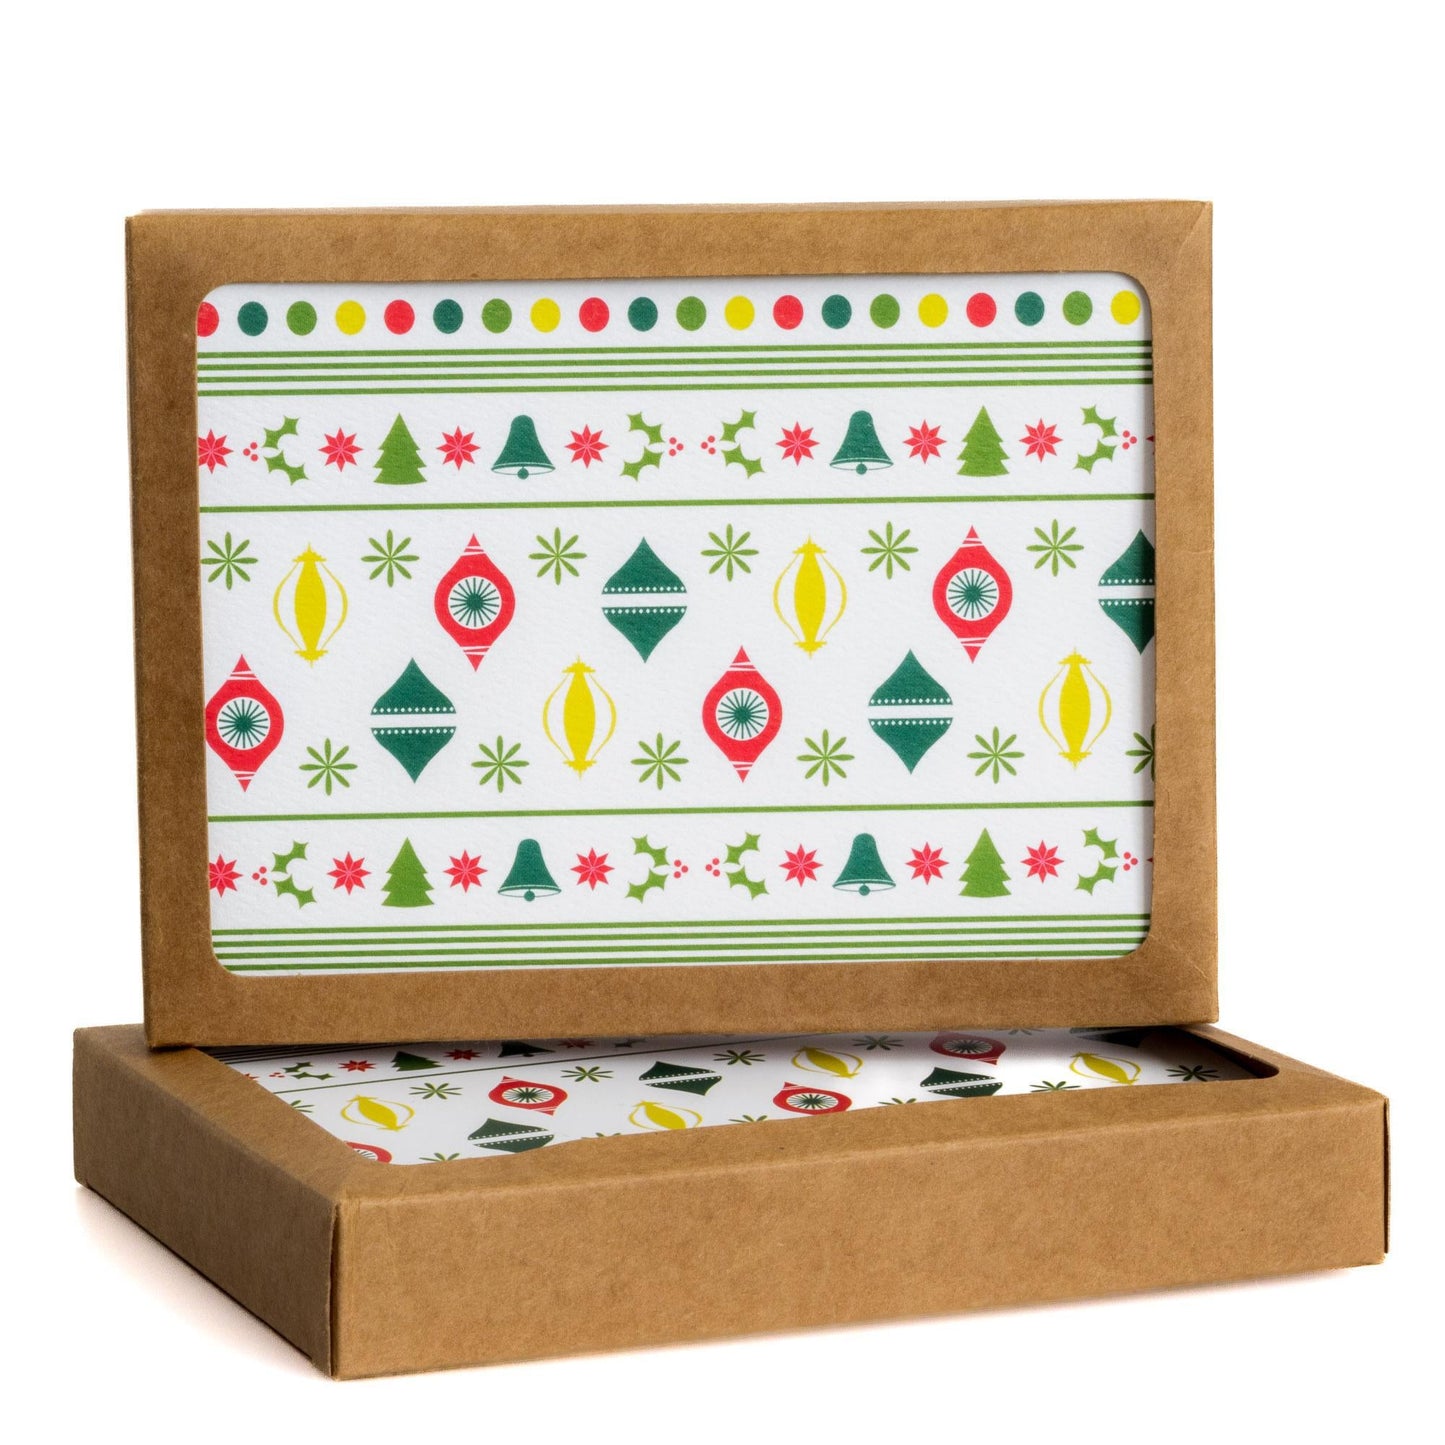 Christmas Bright Boxed Card Set - Blue Kite Press